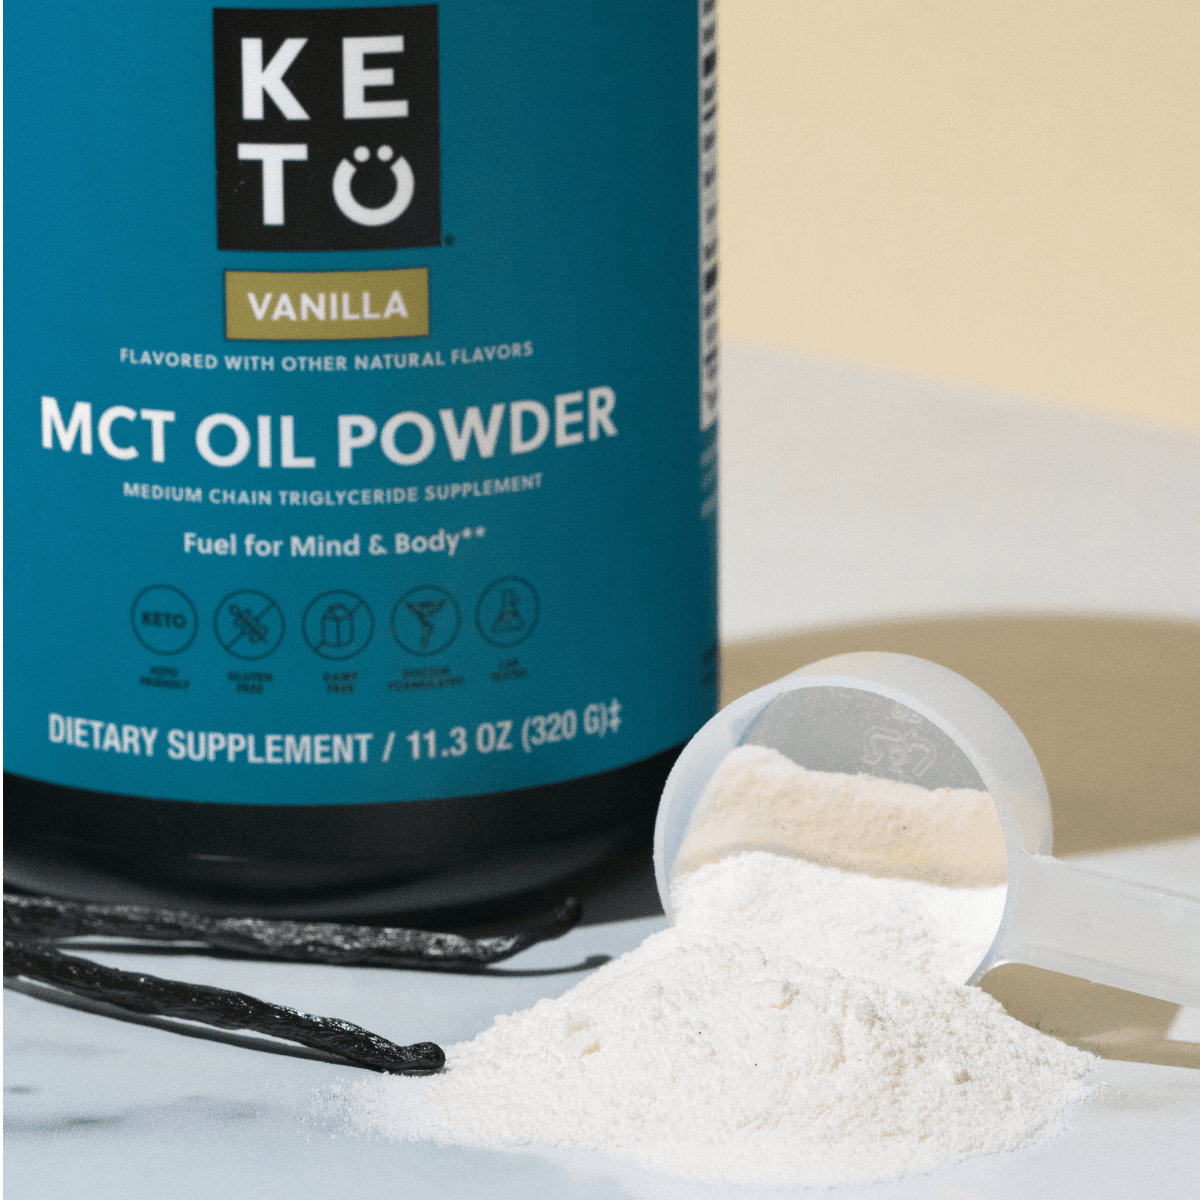 MCT Powder